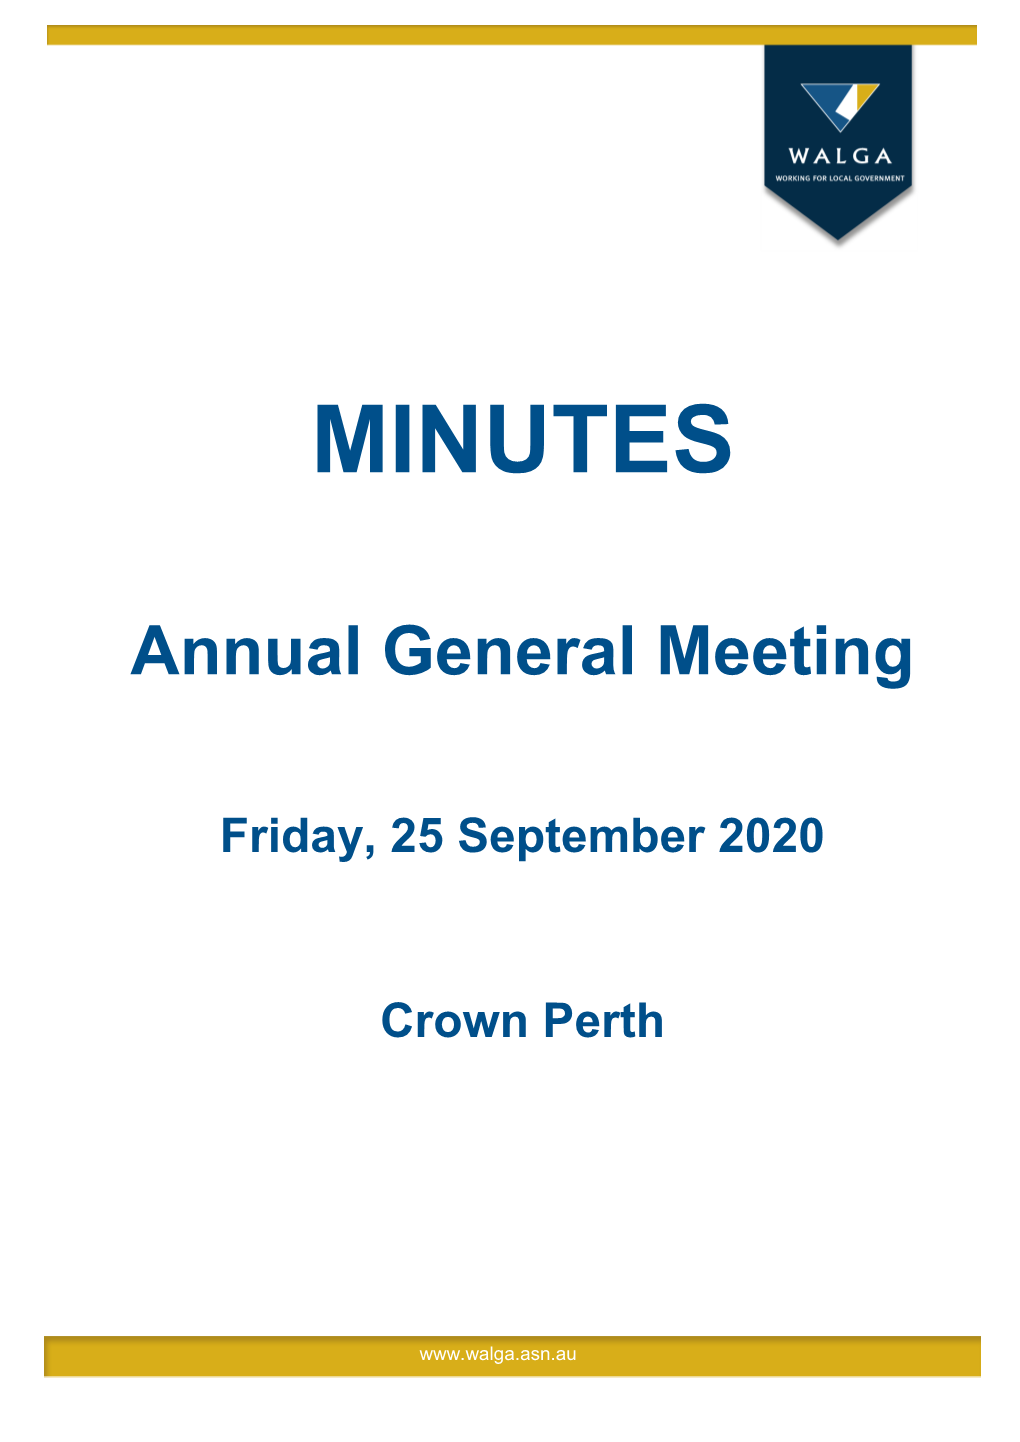 WALGA 2020 Annual General Meeting Minutes